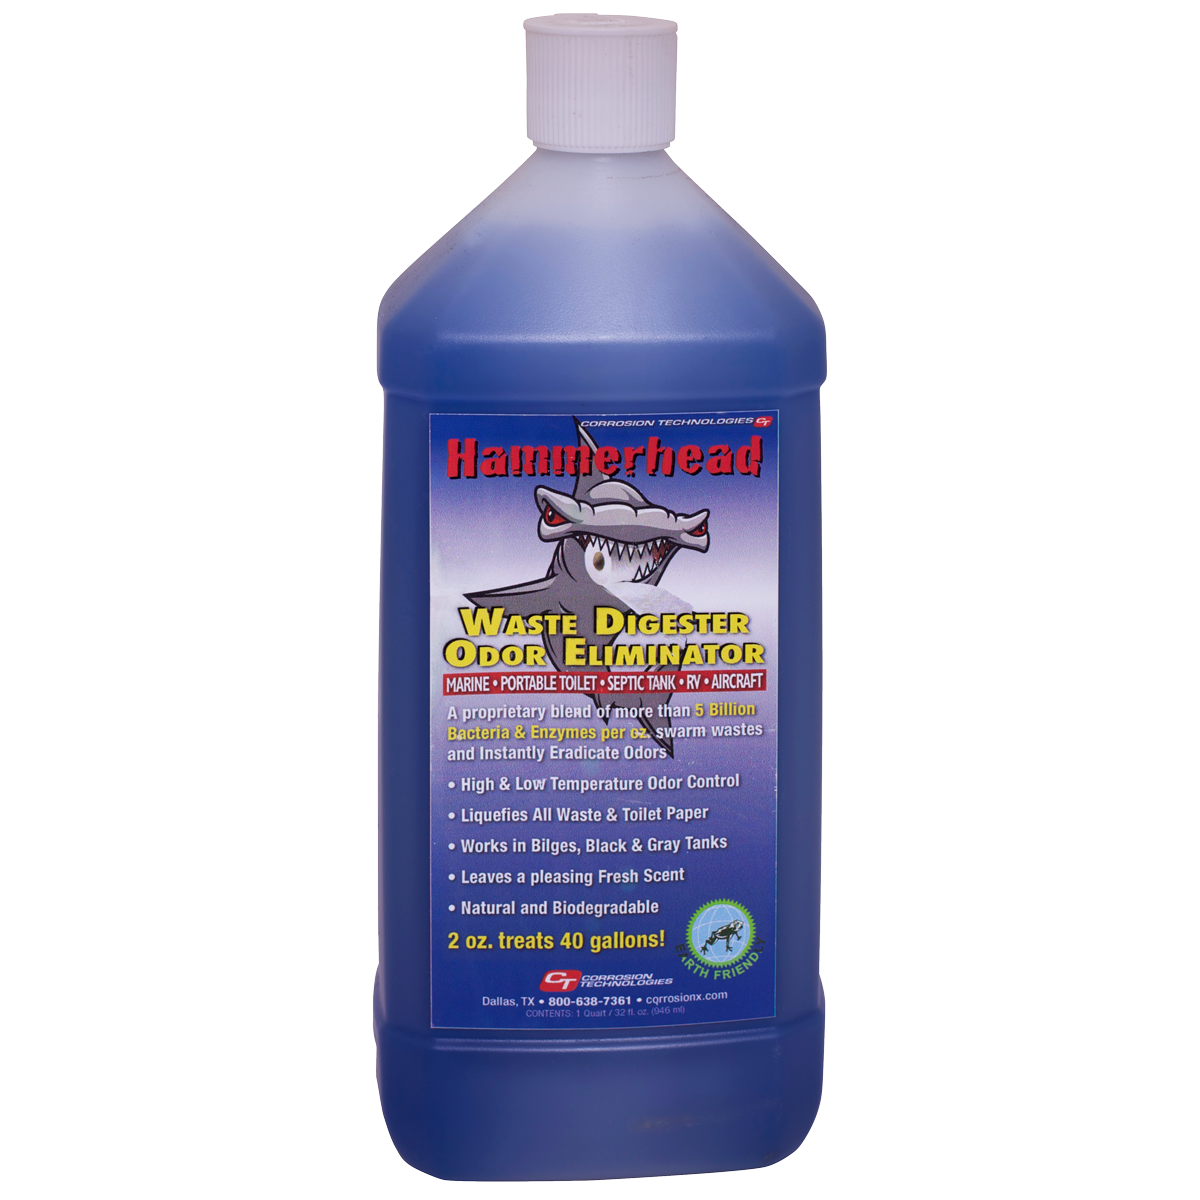 Hammerhead waste digester / odor eliminator